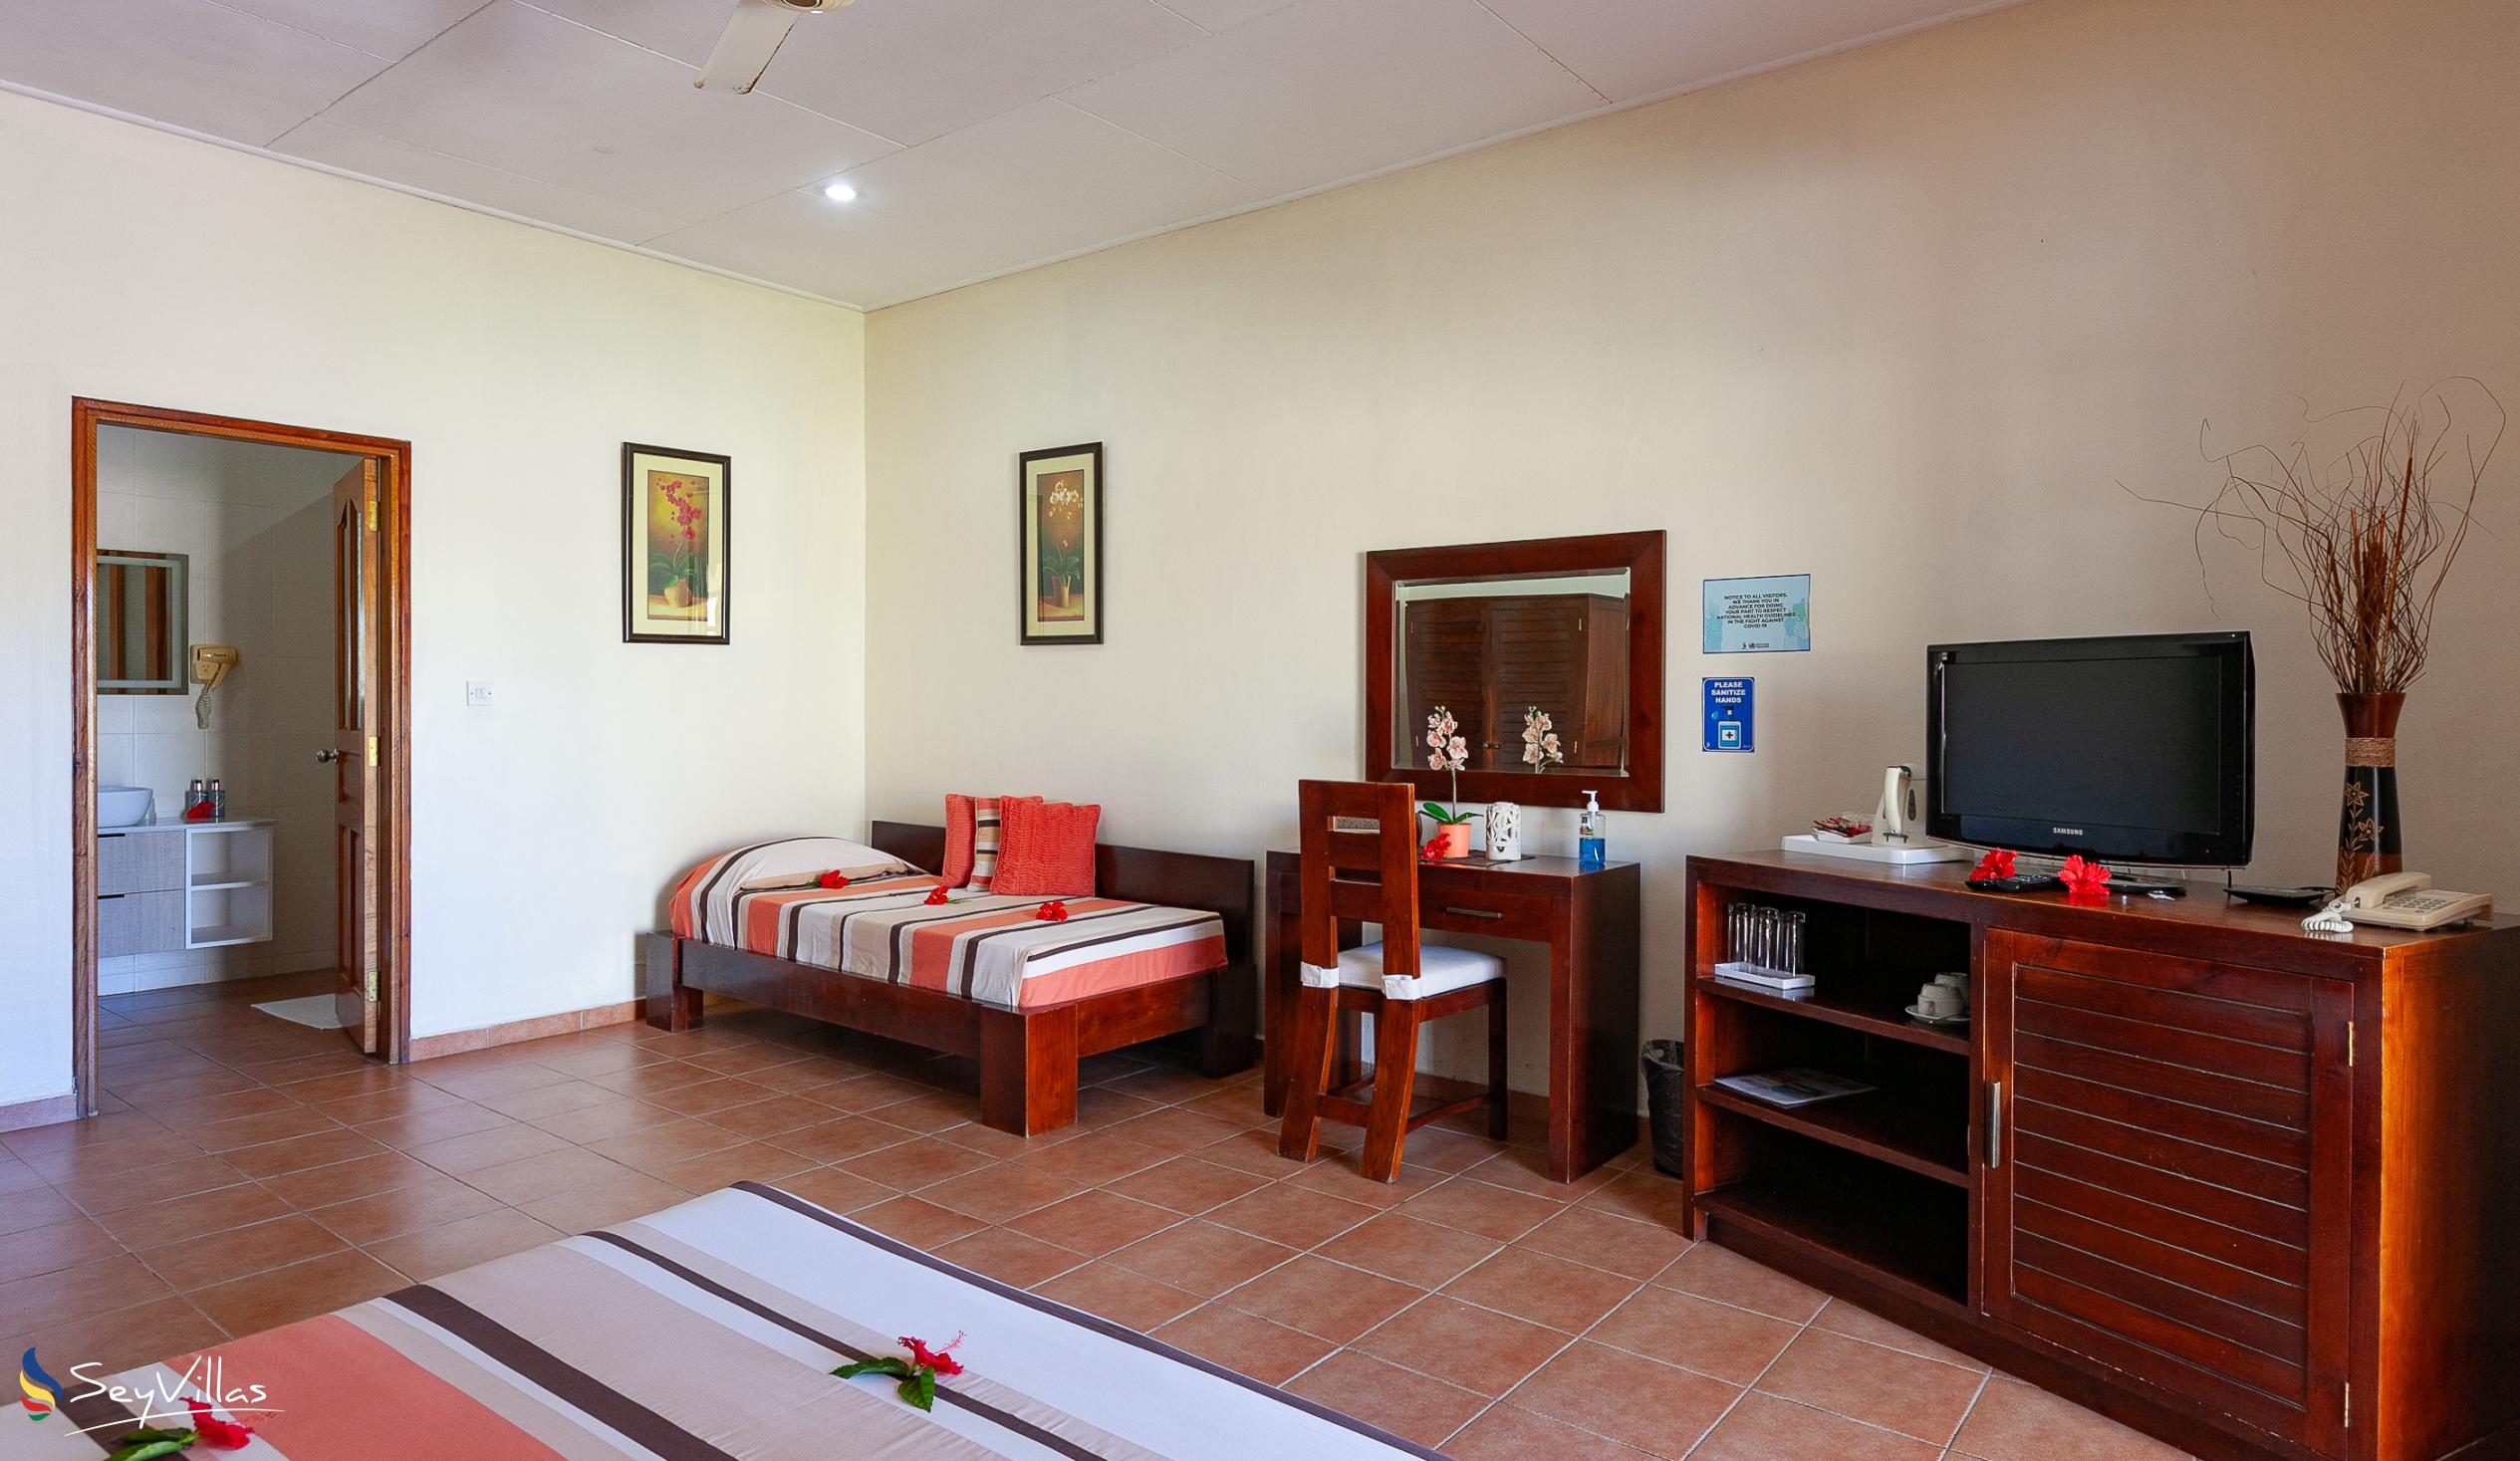 Foto 45: Britannia Hotel - Chambre Familiale Supérieure - Praslin (Seychelles)